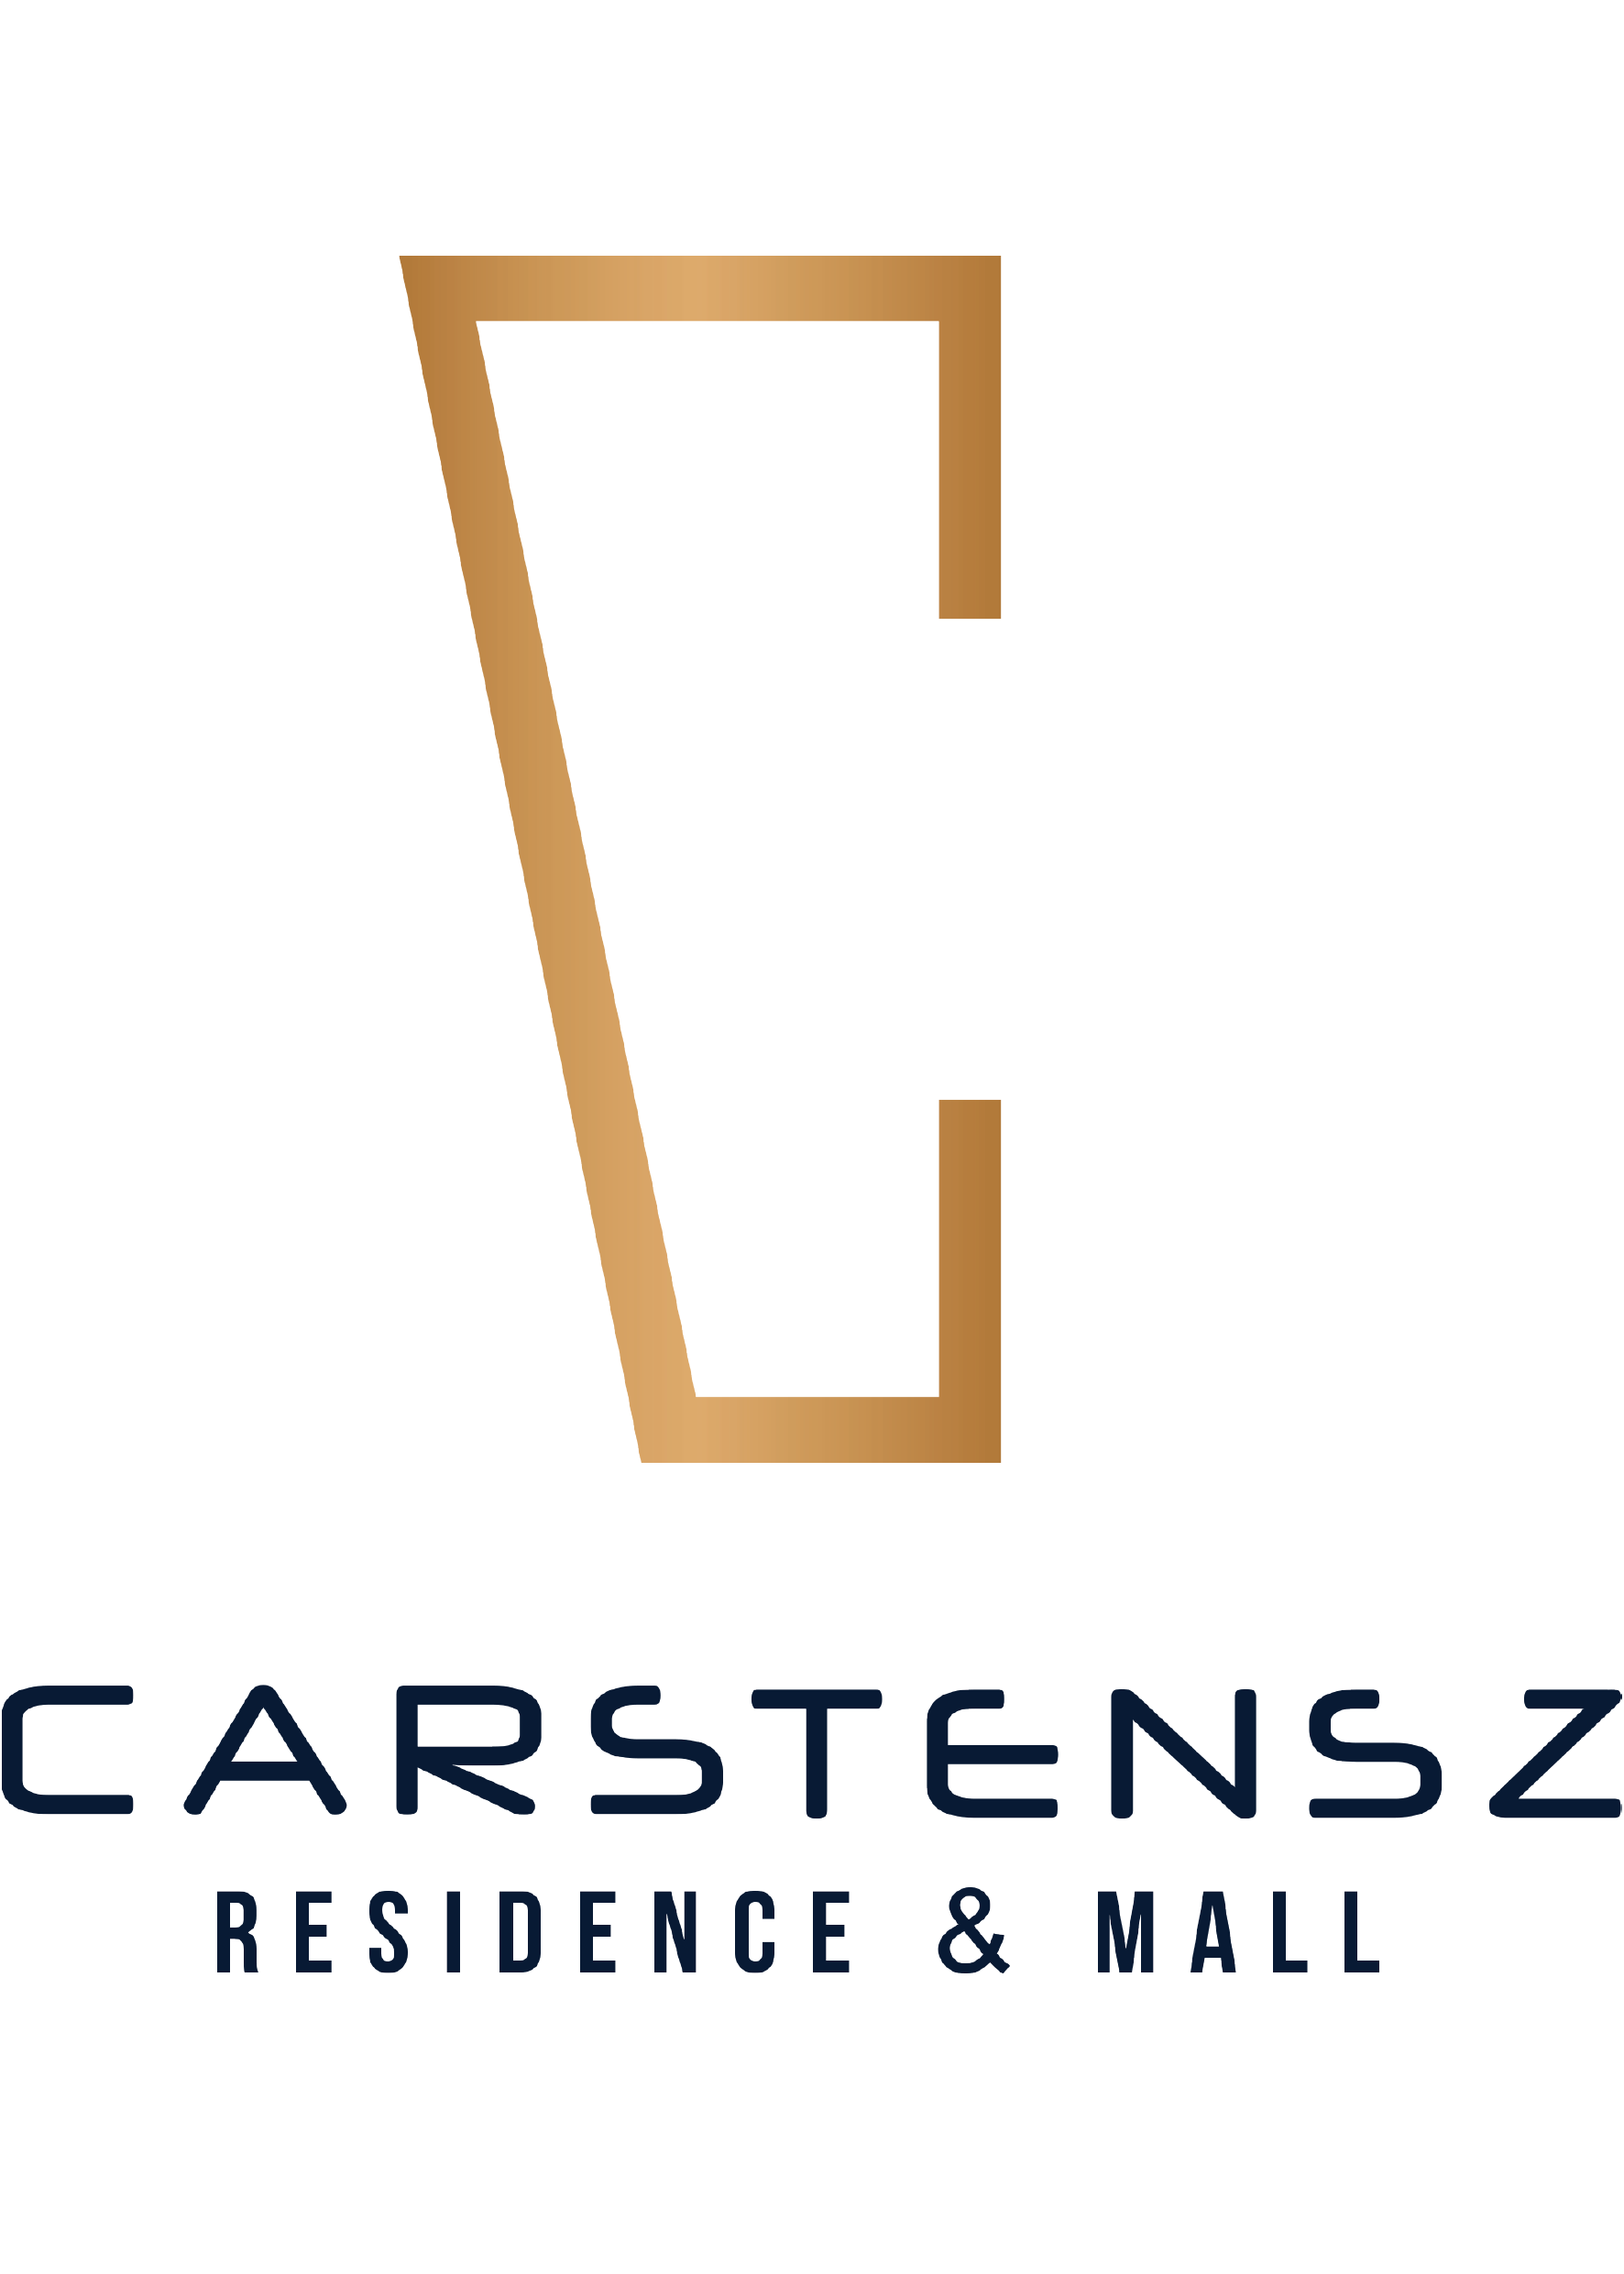 Carstensz Building